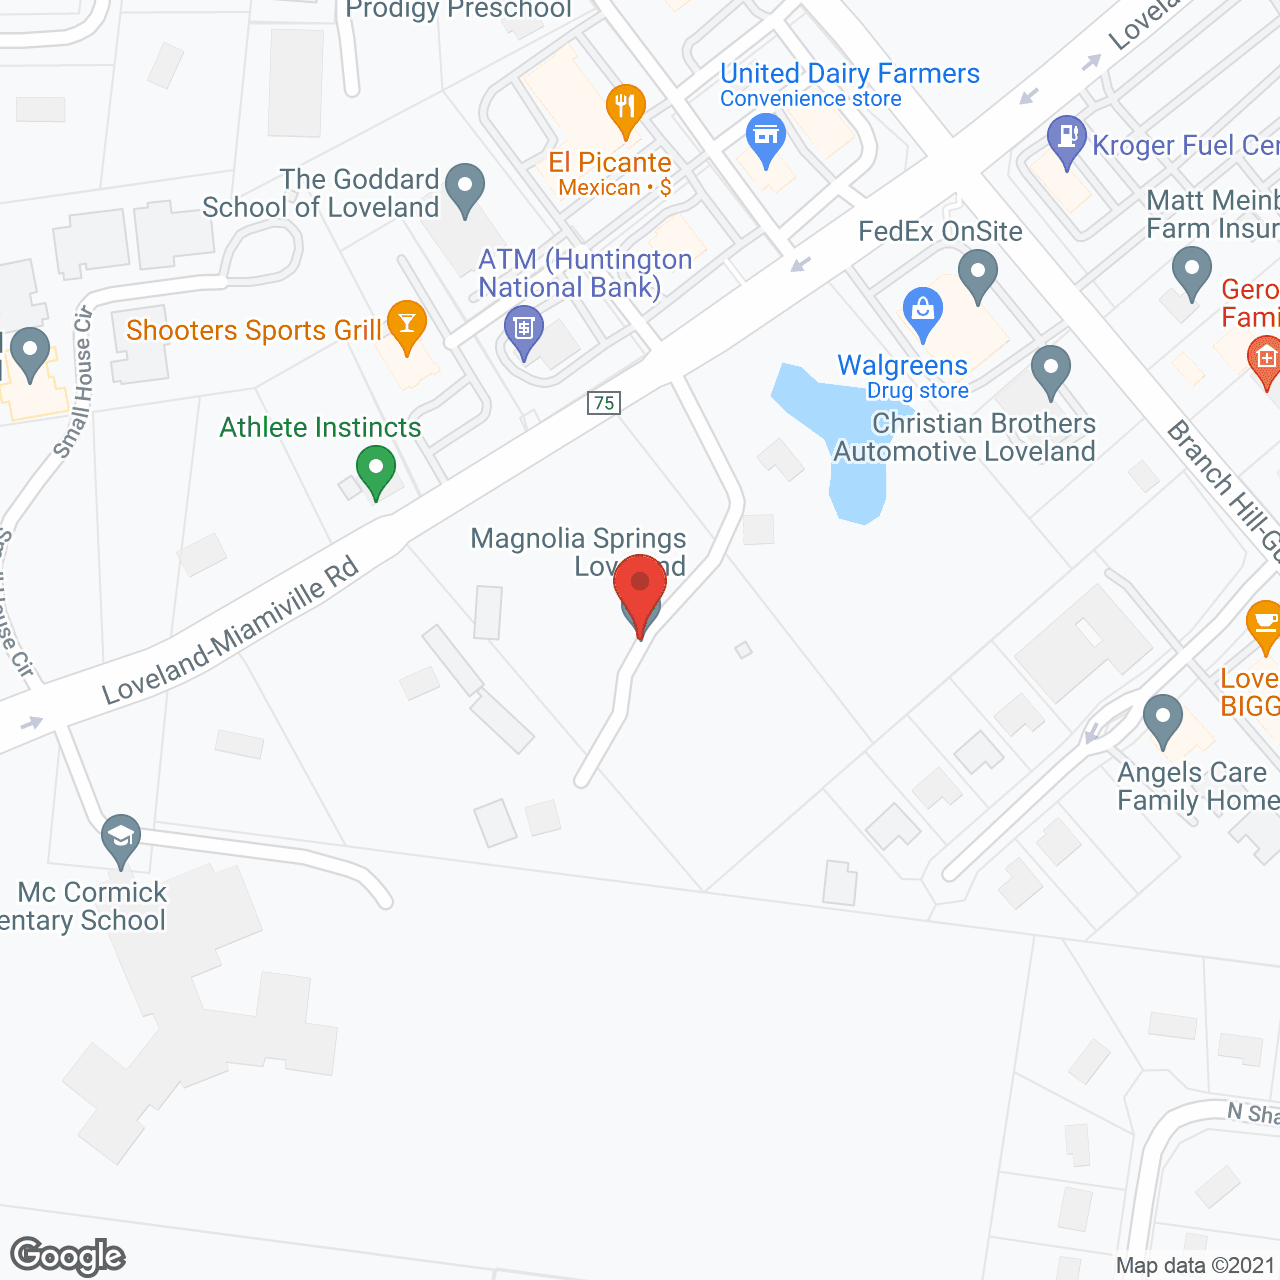 Magnolia Springs Loveland in google map